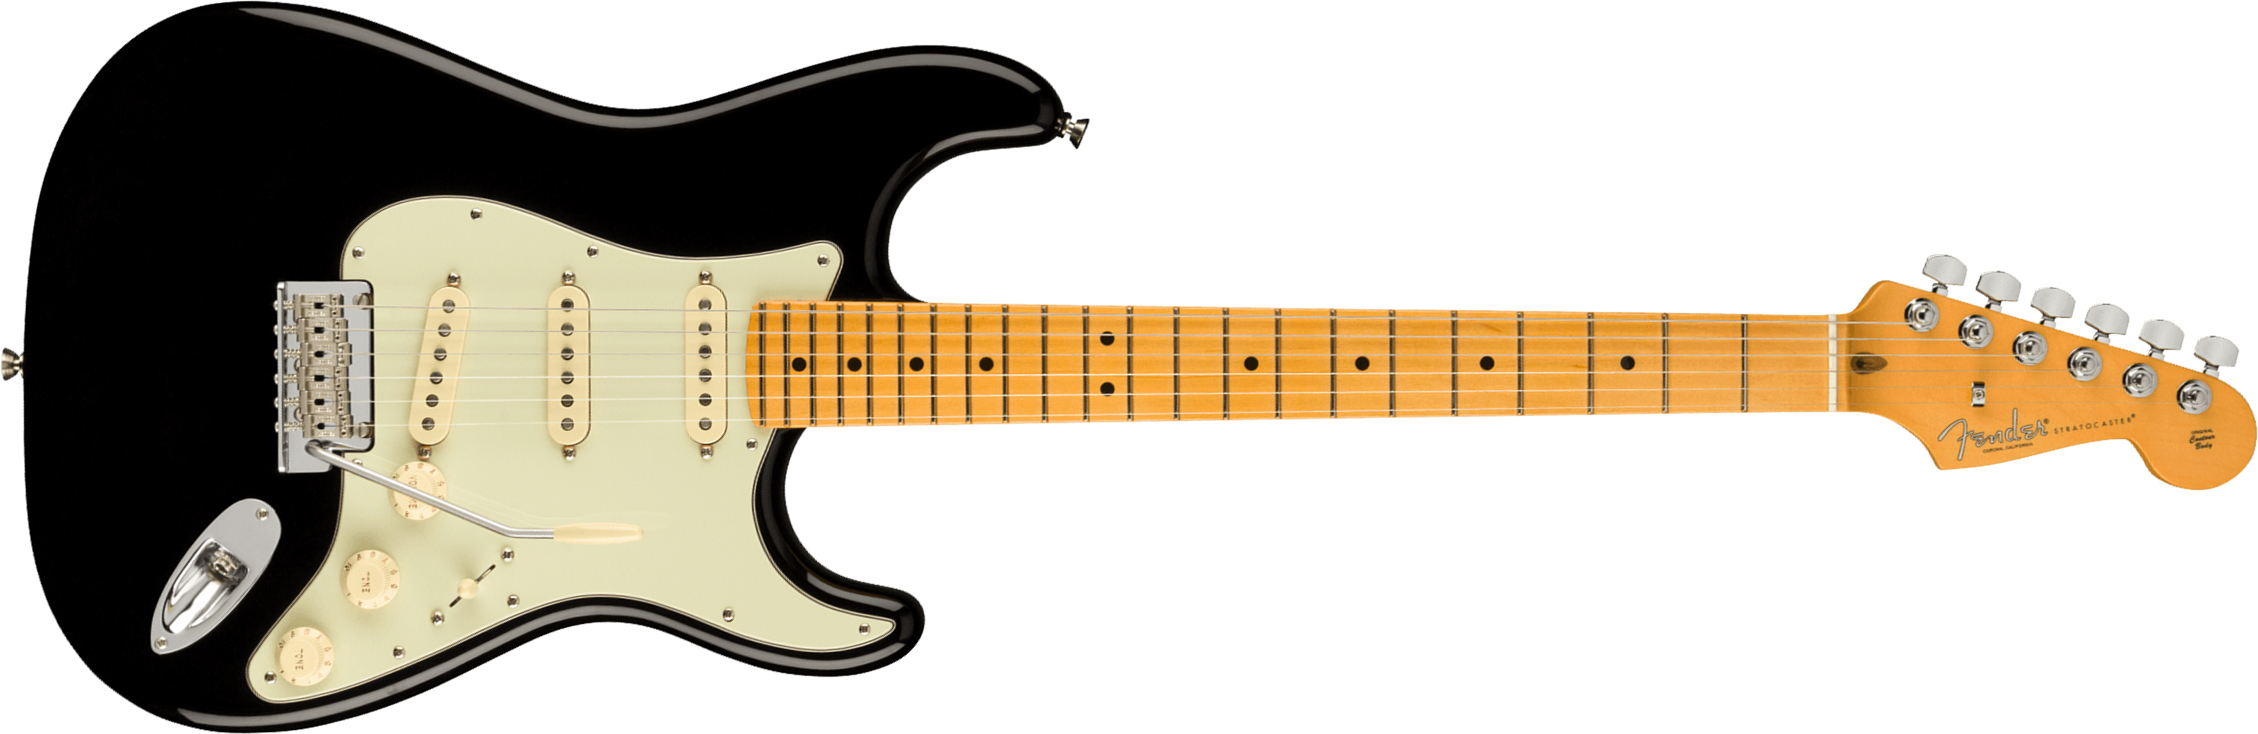 Fender Strat American Professional Ii Usa Mn - Black - Str shape electric guitar - Main picture